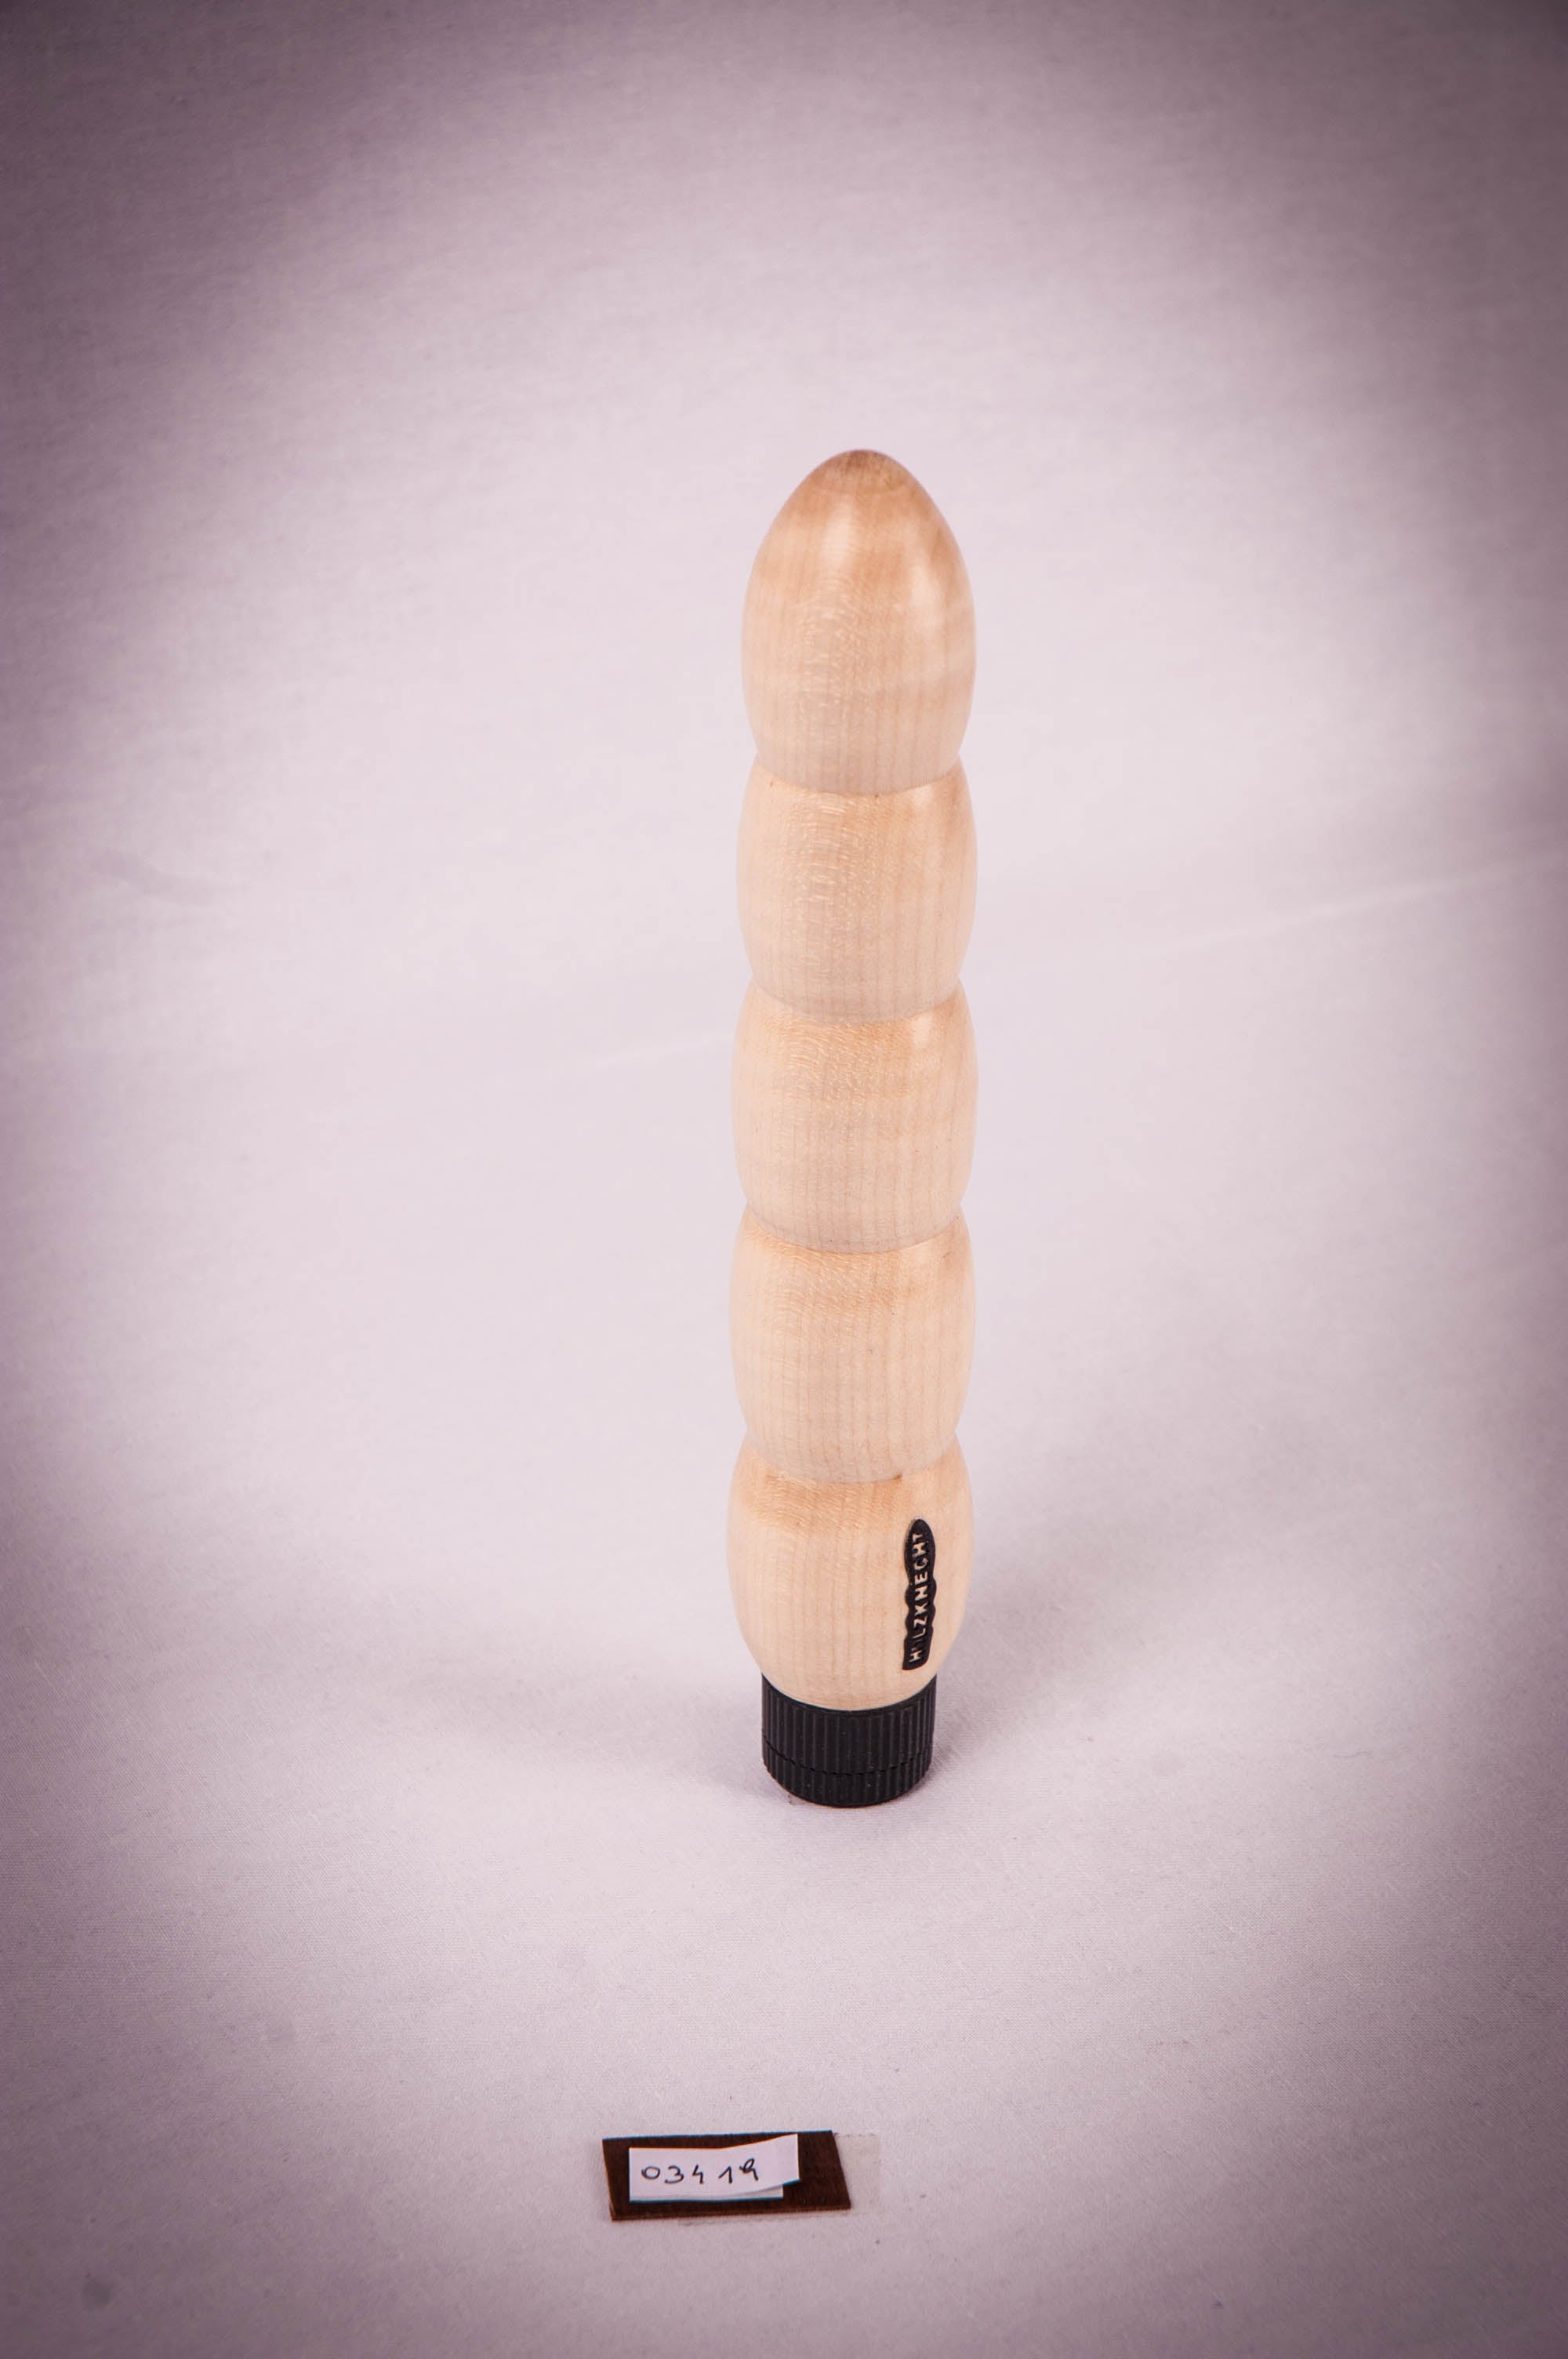 BURRLI || Ahorn || Holzvibrator || Holzdildo || Sex Toy || Wood Vibrator || handmade by Holz-Knecht